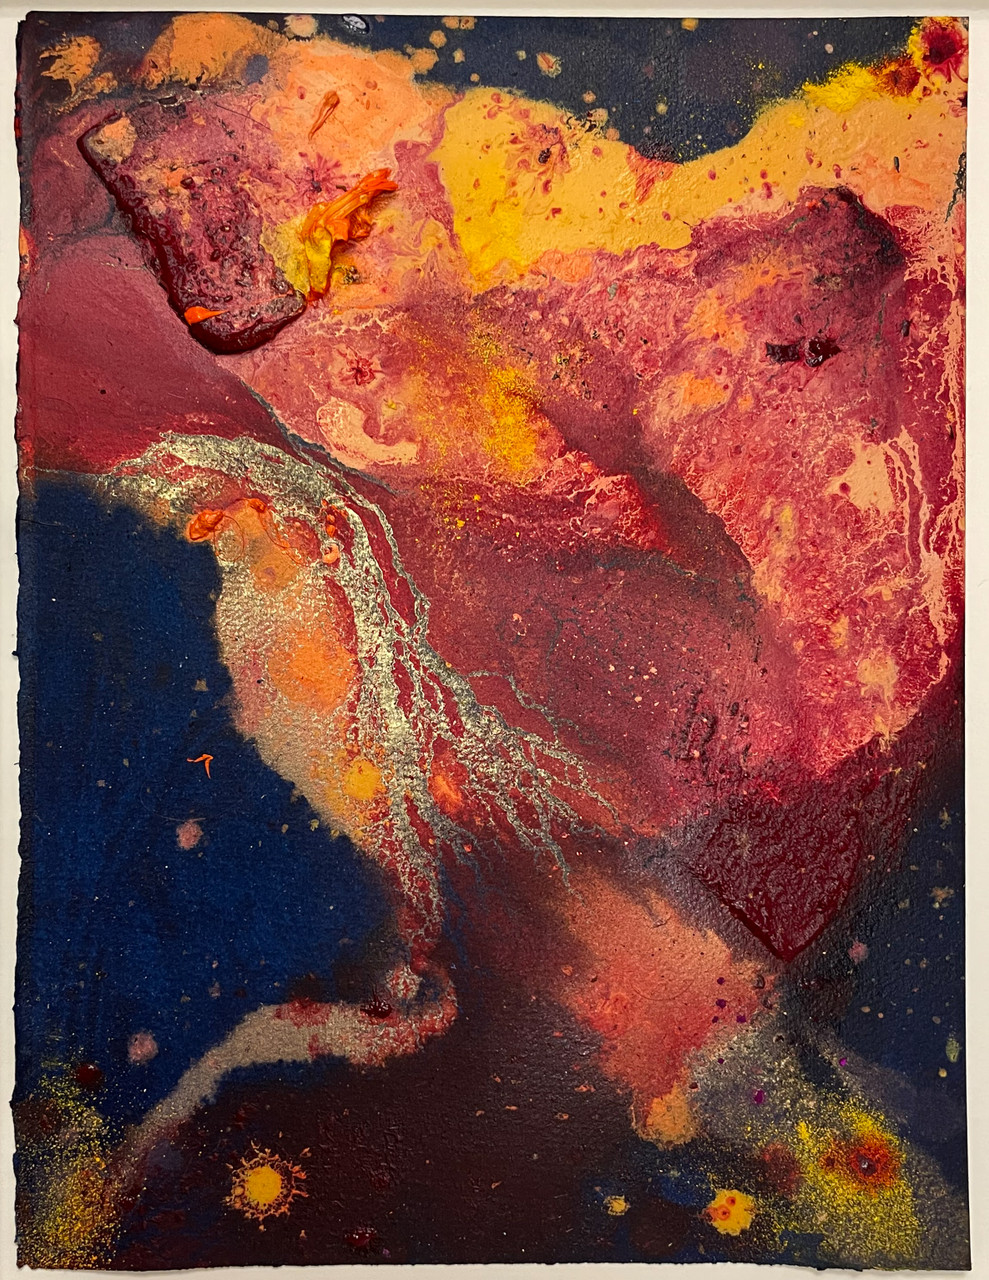 Augustus Francis, Nocturnal Light Orbitar, Oil on paper, 15” x 11 ½”, 2021